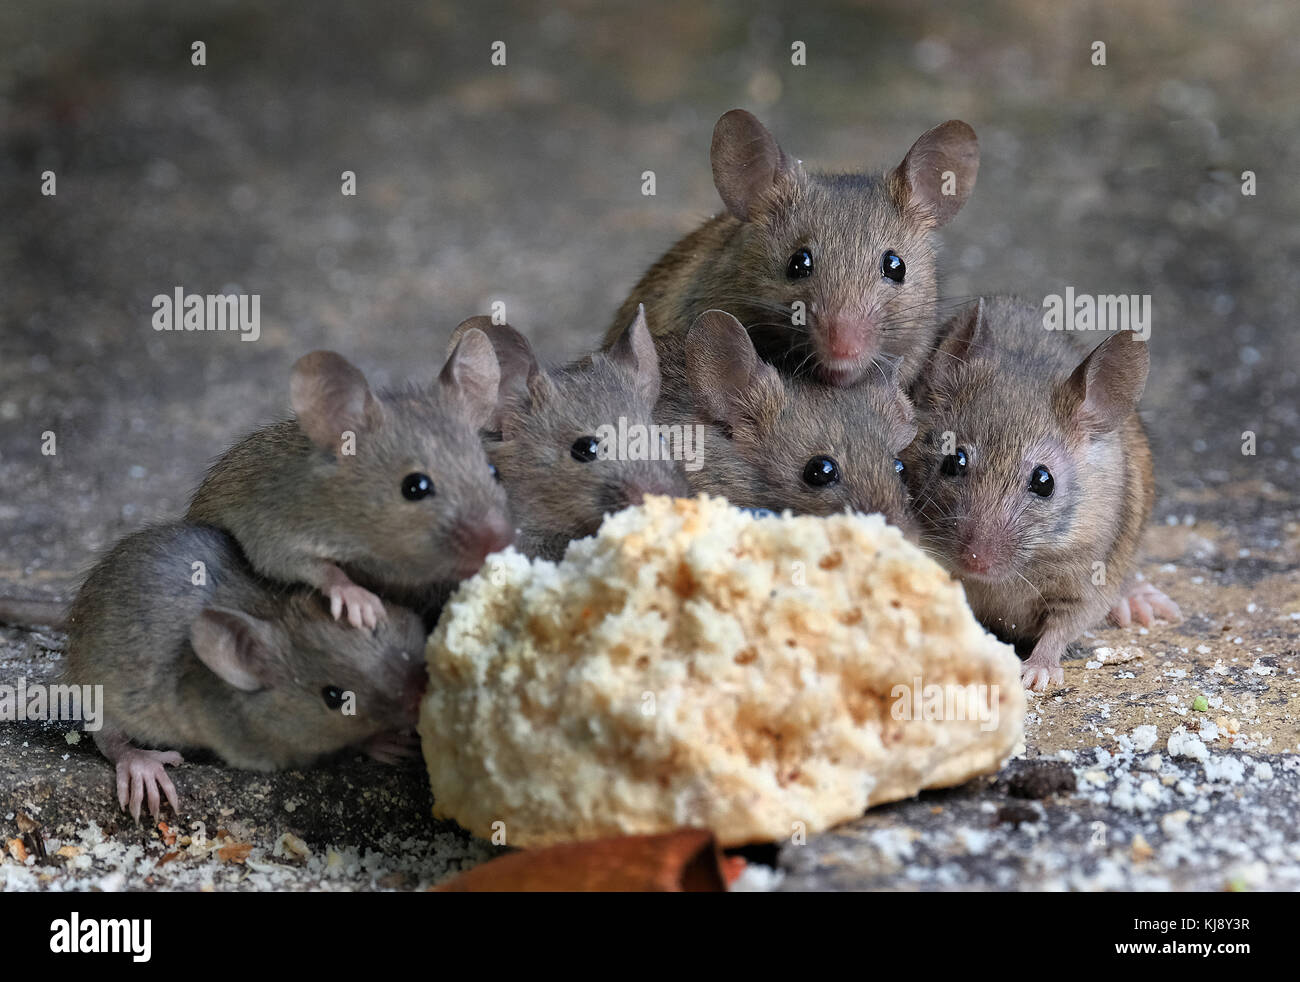 Mice feeding on cake in urban house garden. Stock Photo